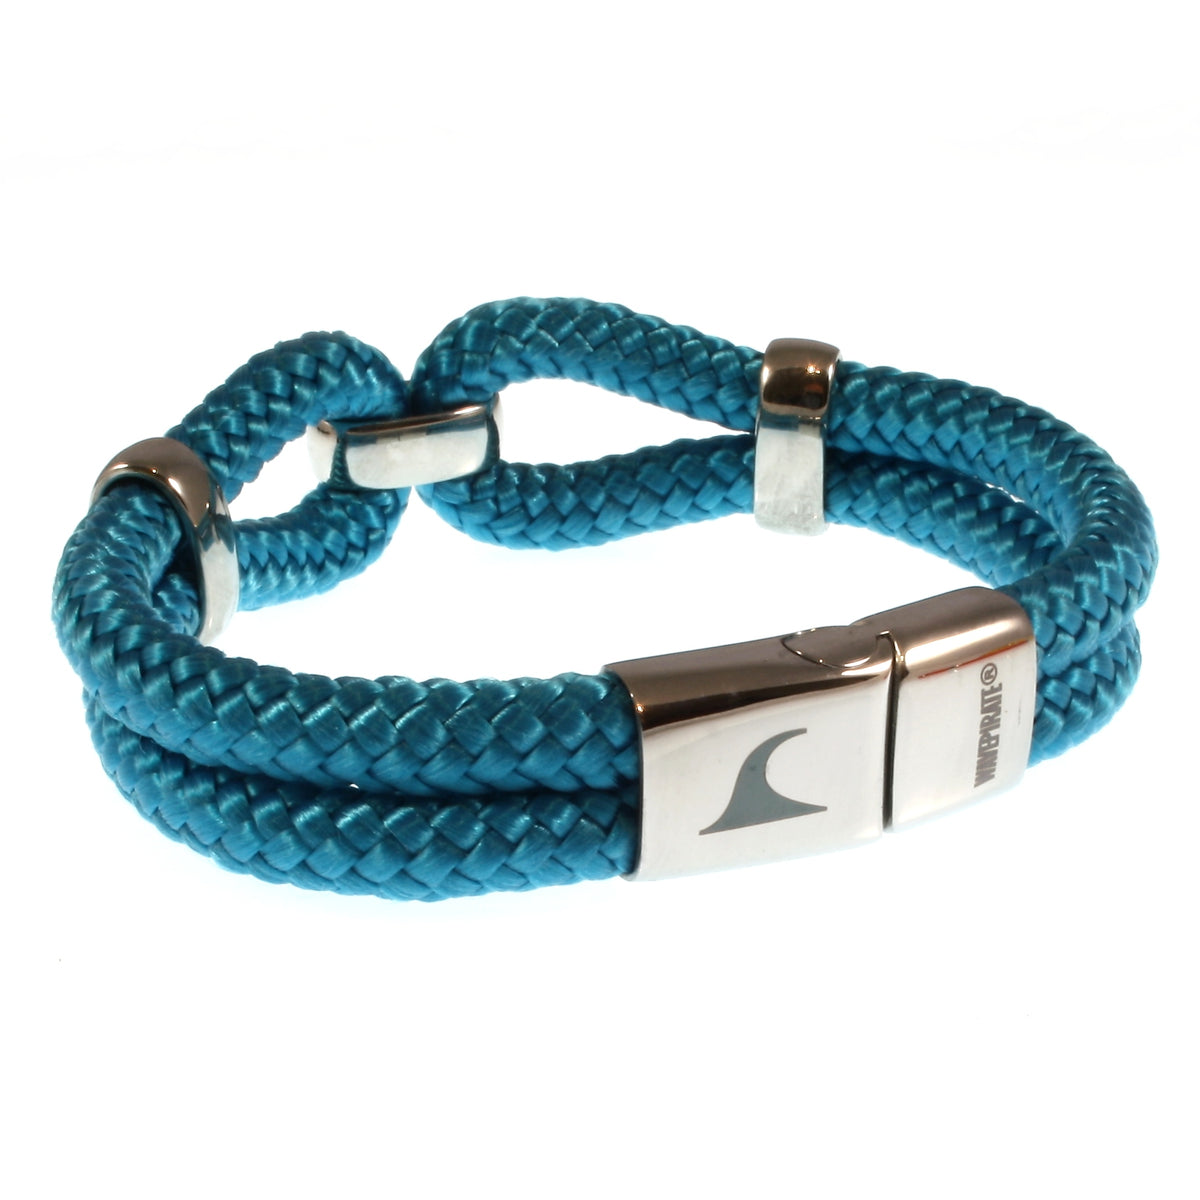 Damen-Segeltau-armband-roma-blau-geflochten-Edelstahlverschluss-hinten-wavepirate-shop-st